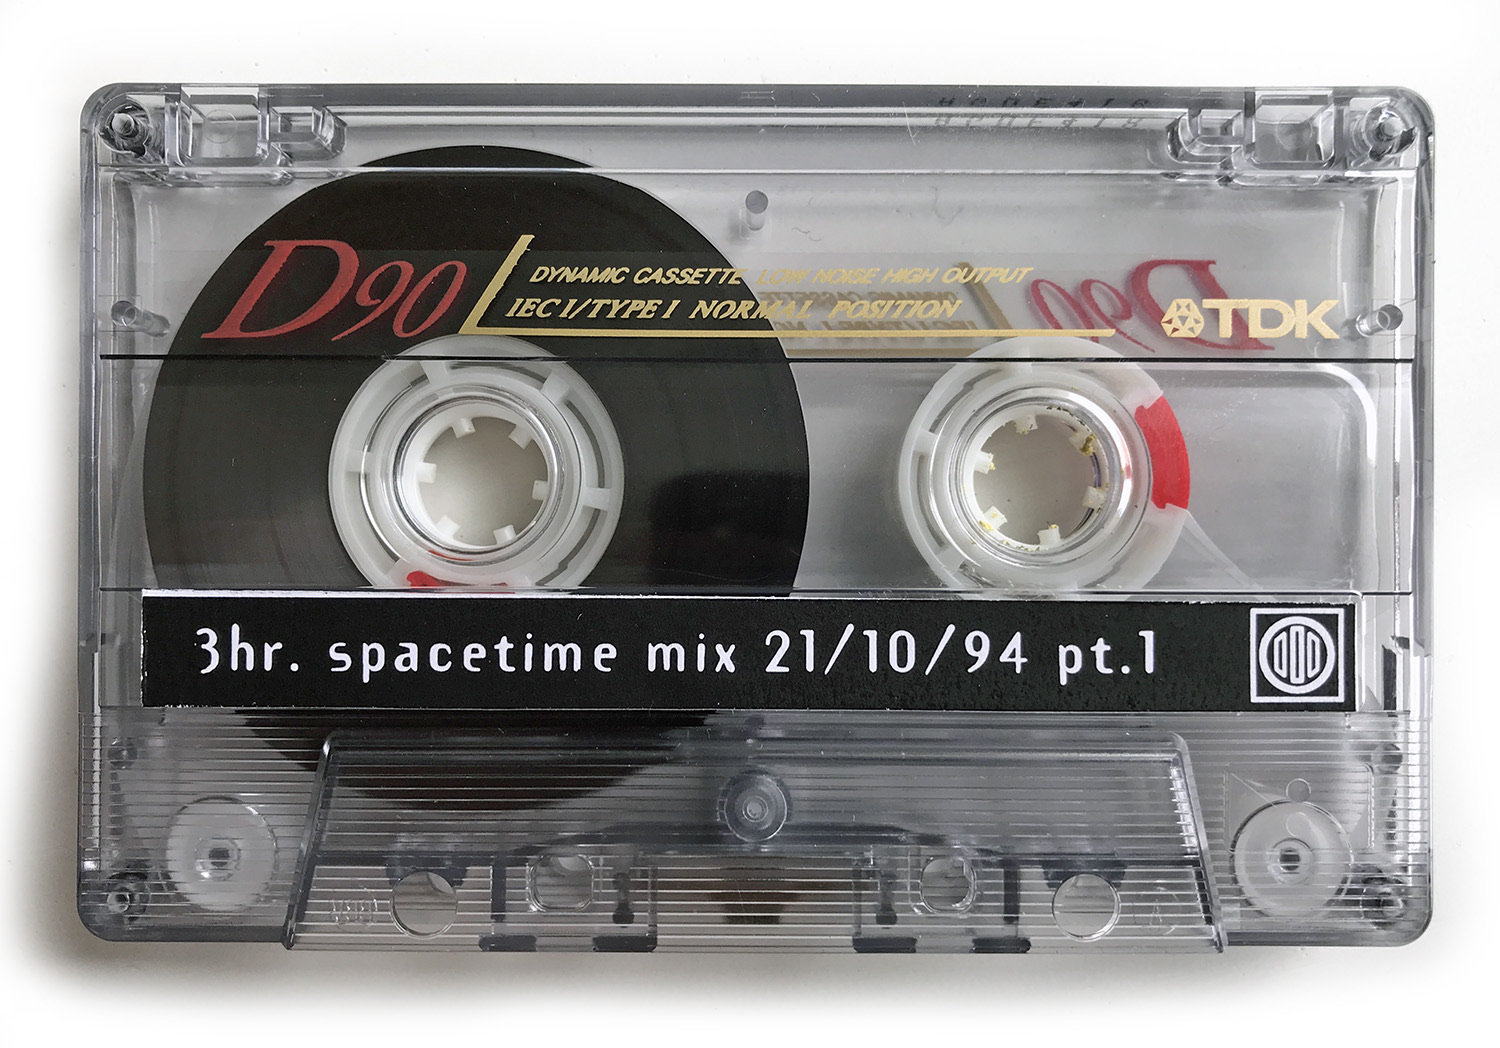 MS200 3hr Spacetime mix 21:10:94 pt.1 tape